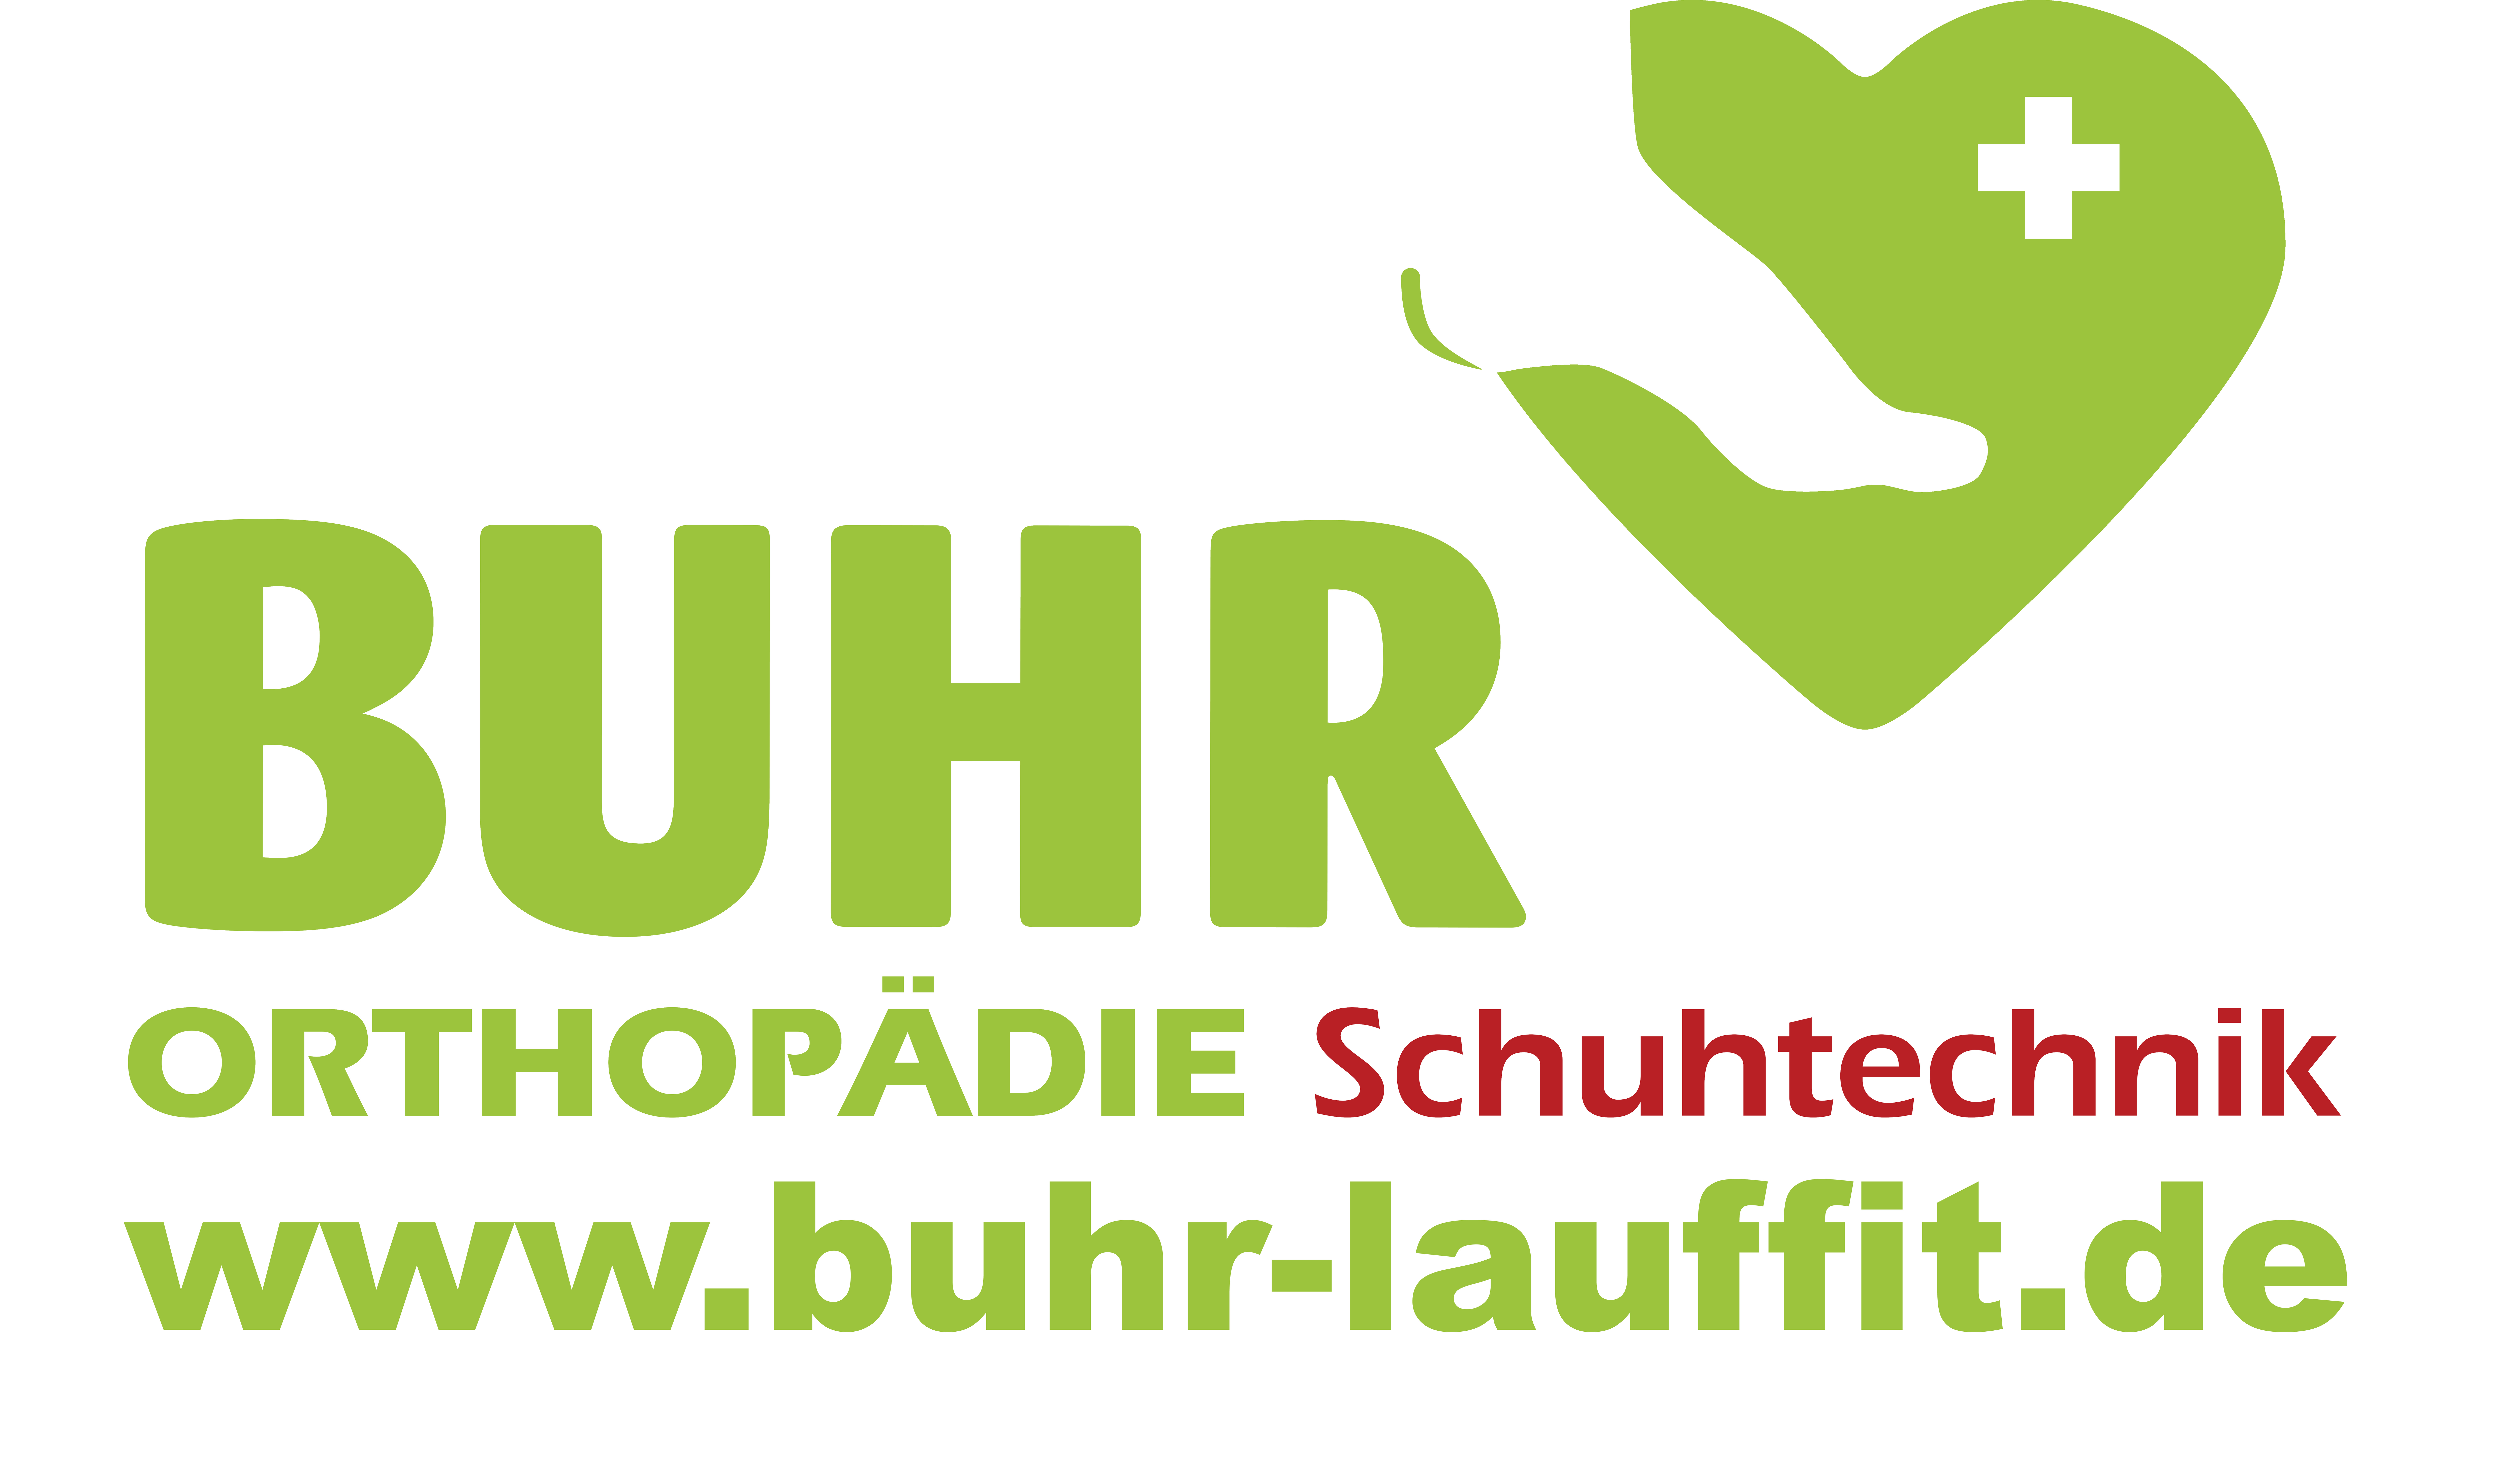 Buhr Orthopädie-Schuhtechnik GmbH